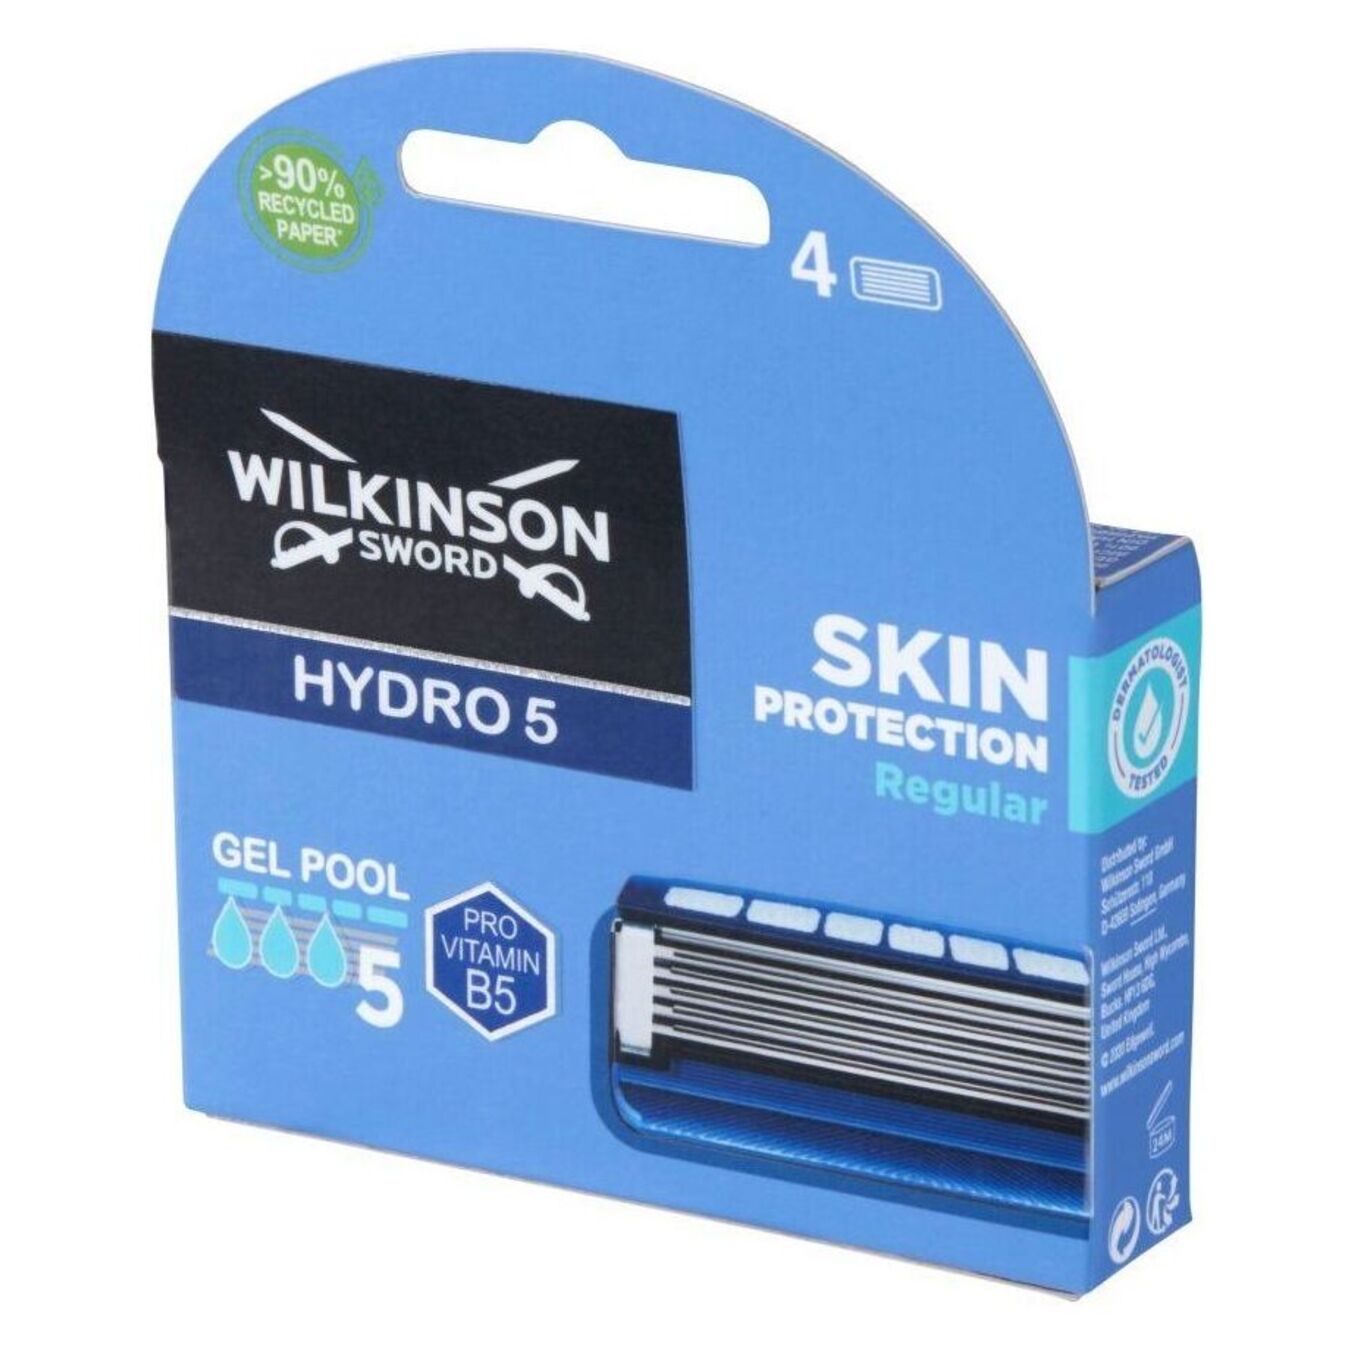 Cartridges for shaving Wilkinson Sword Hydro 5 Blades 4pcs